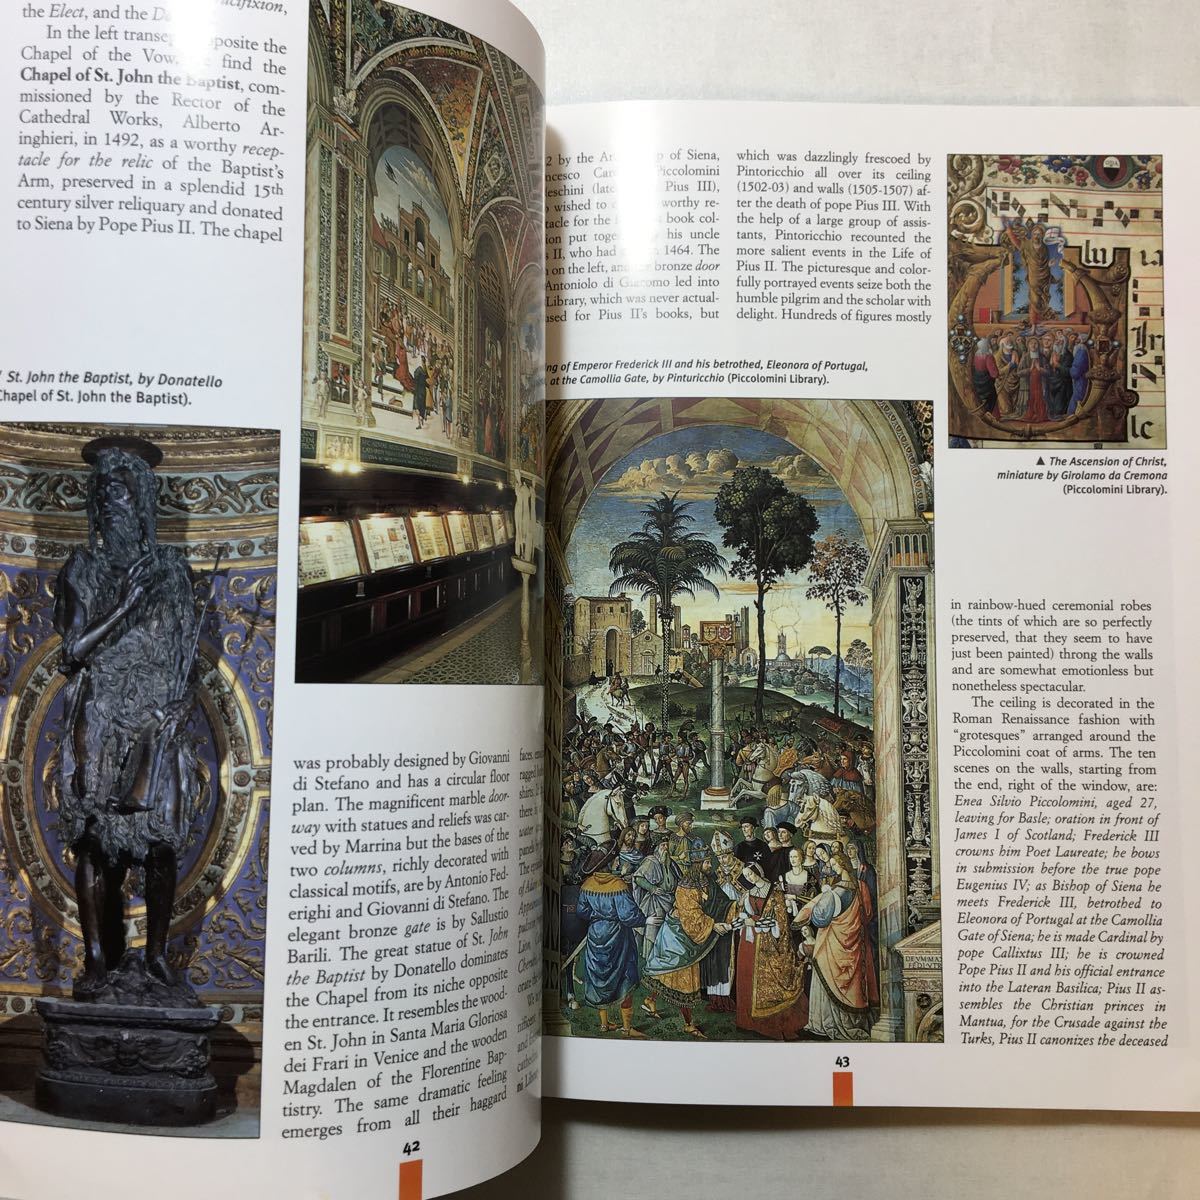 zaa-272♪Siena: History and Masterpieces (Bonechi Travel Guides) ペーパーバック 2001/4/26 英語版 Piero Torriti (著)